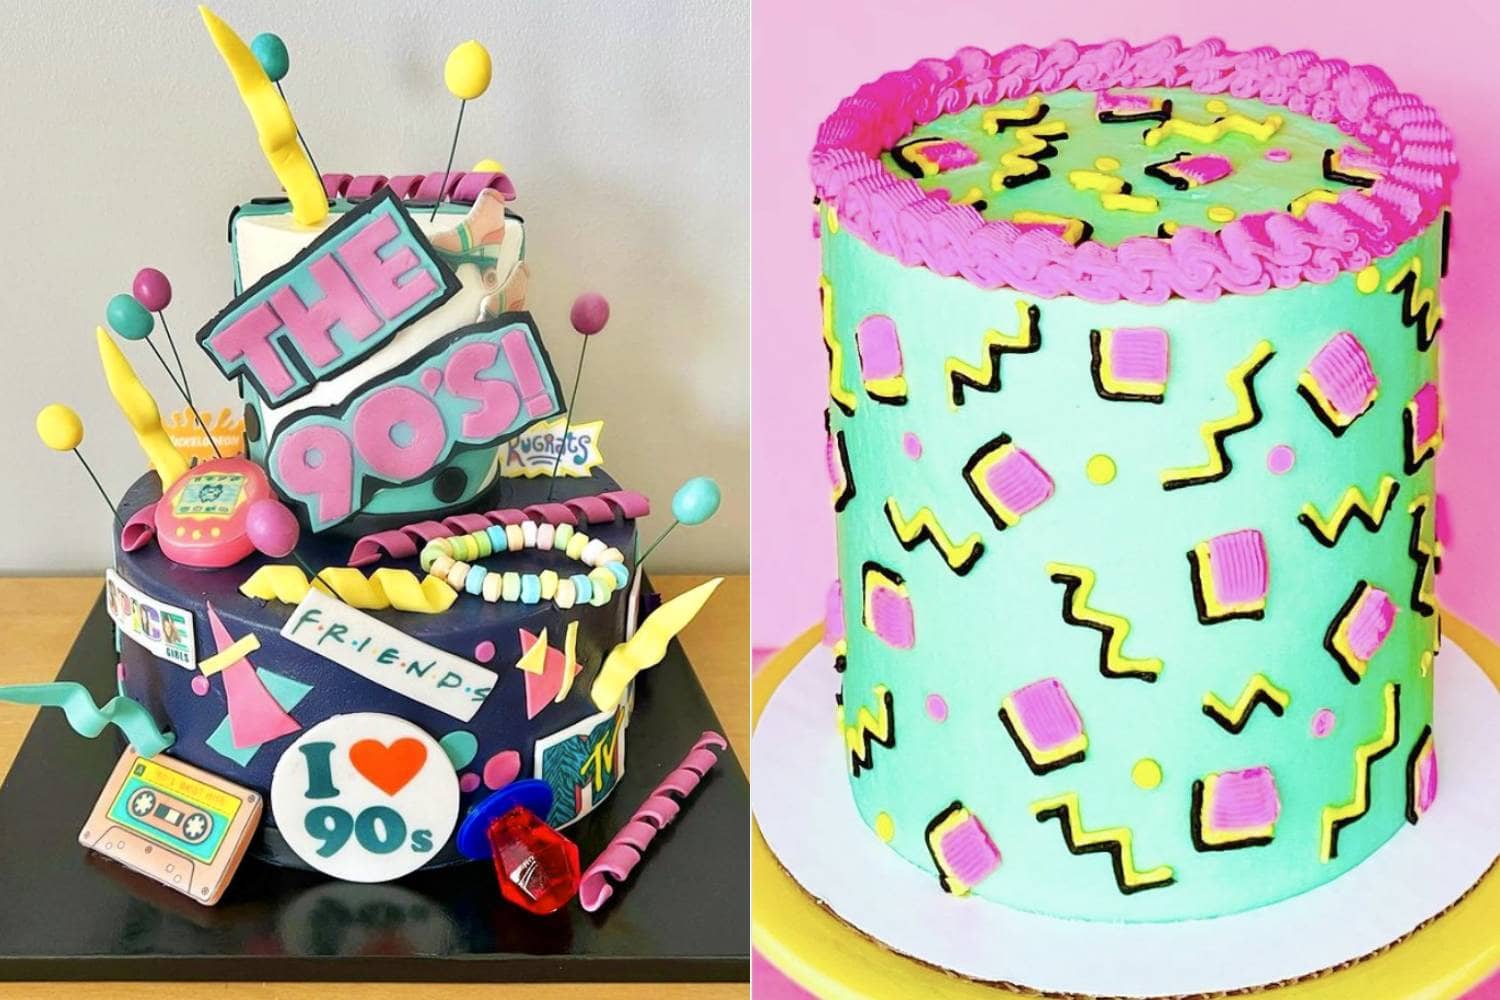 90s Themed Cake: Sweet Nostalgia in Every Bite